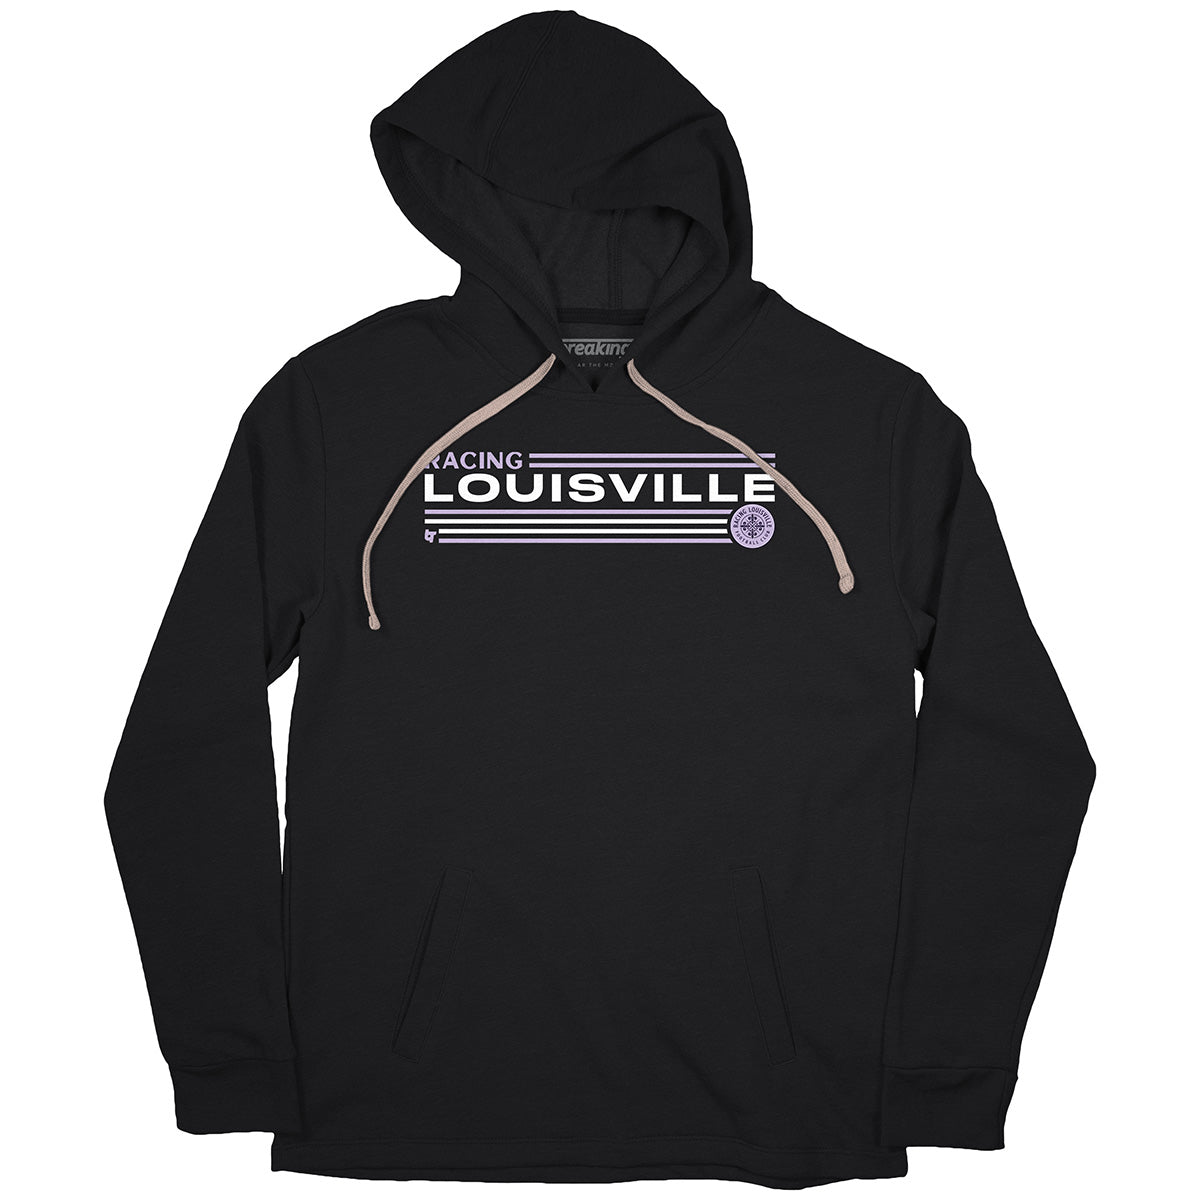 louisville hoodie youth